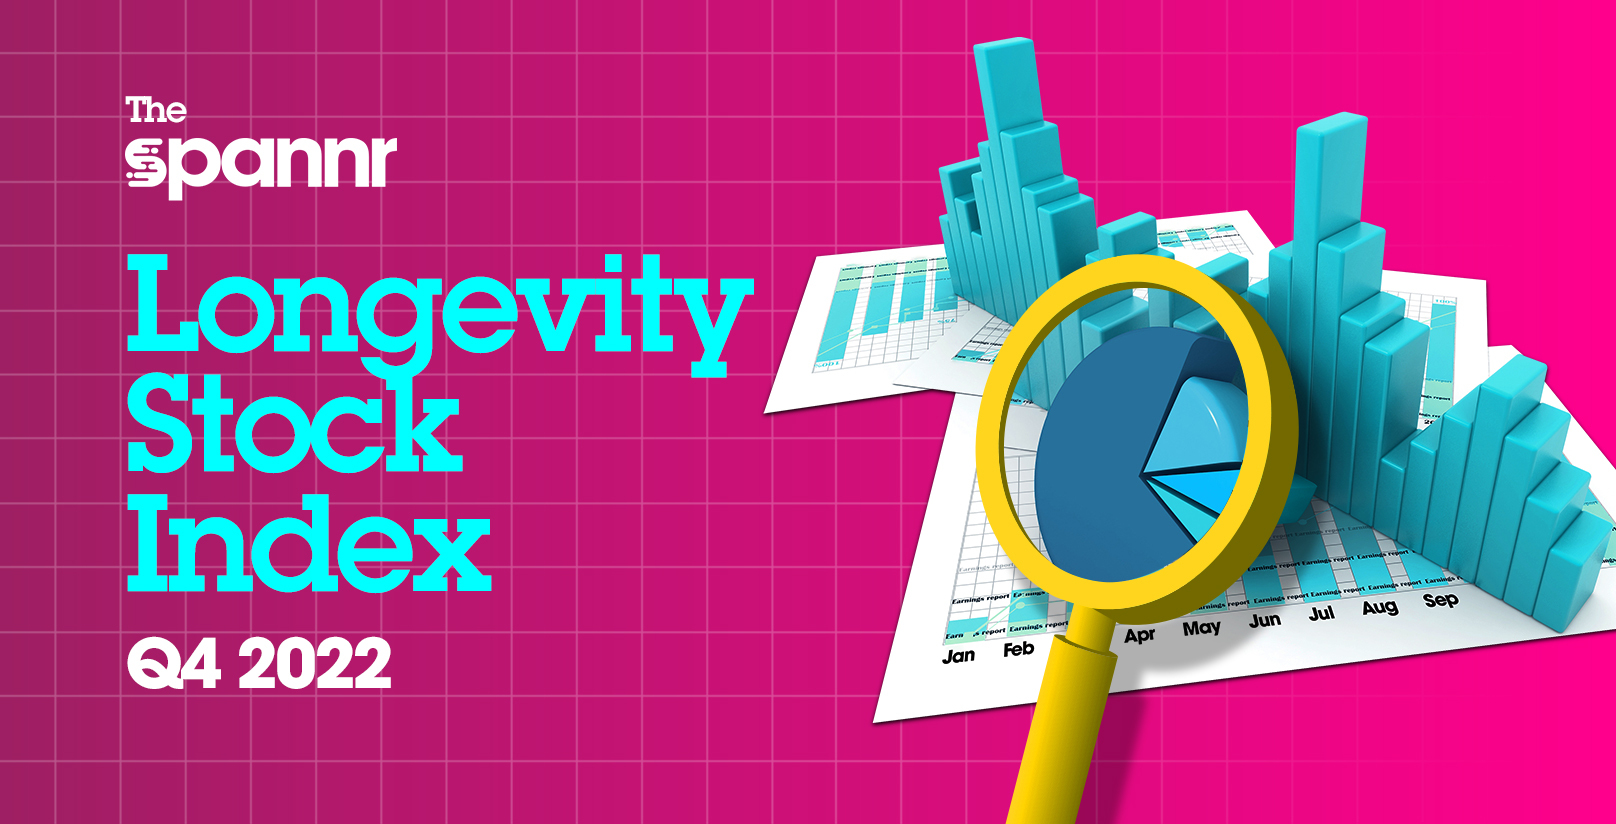 Spannr Longevity Stock Index Review: Q4 2022